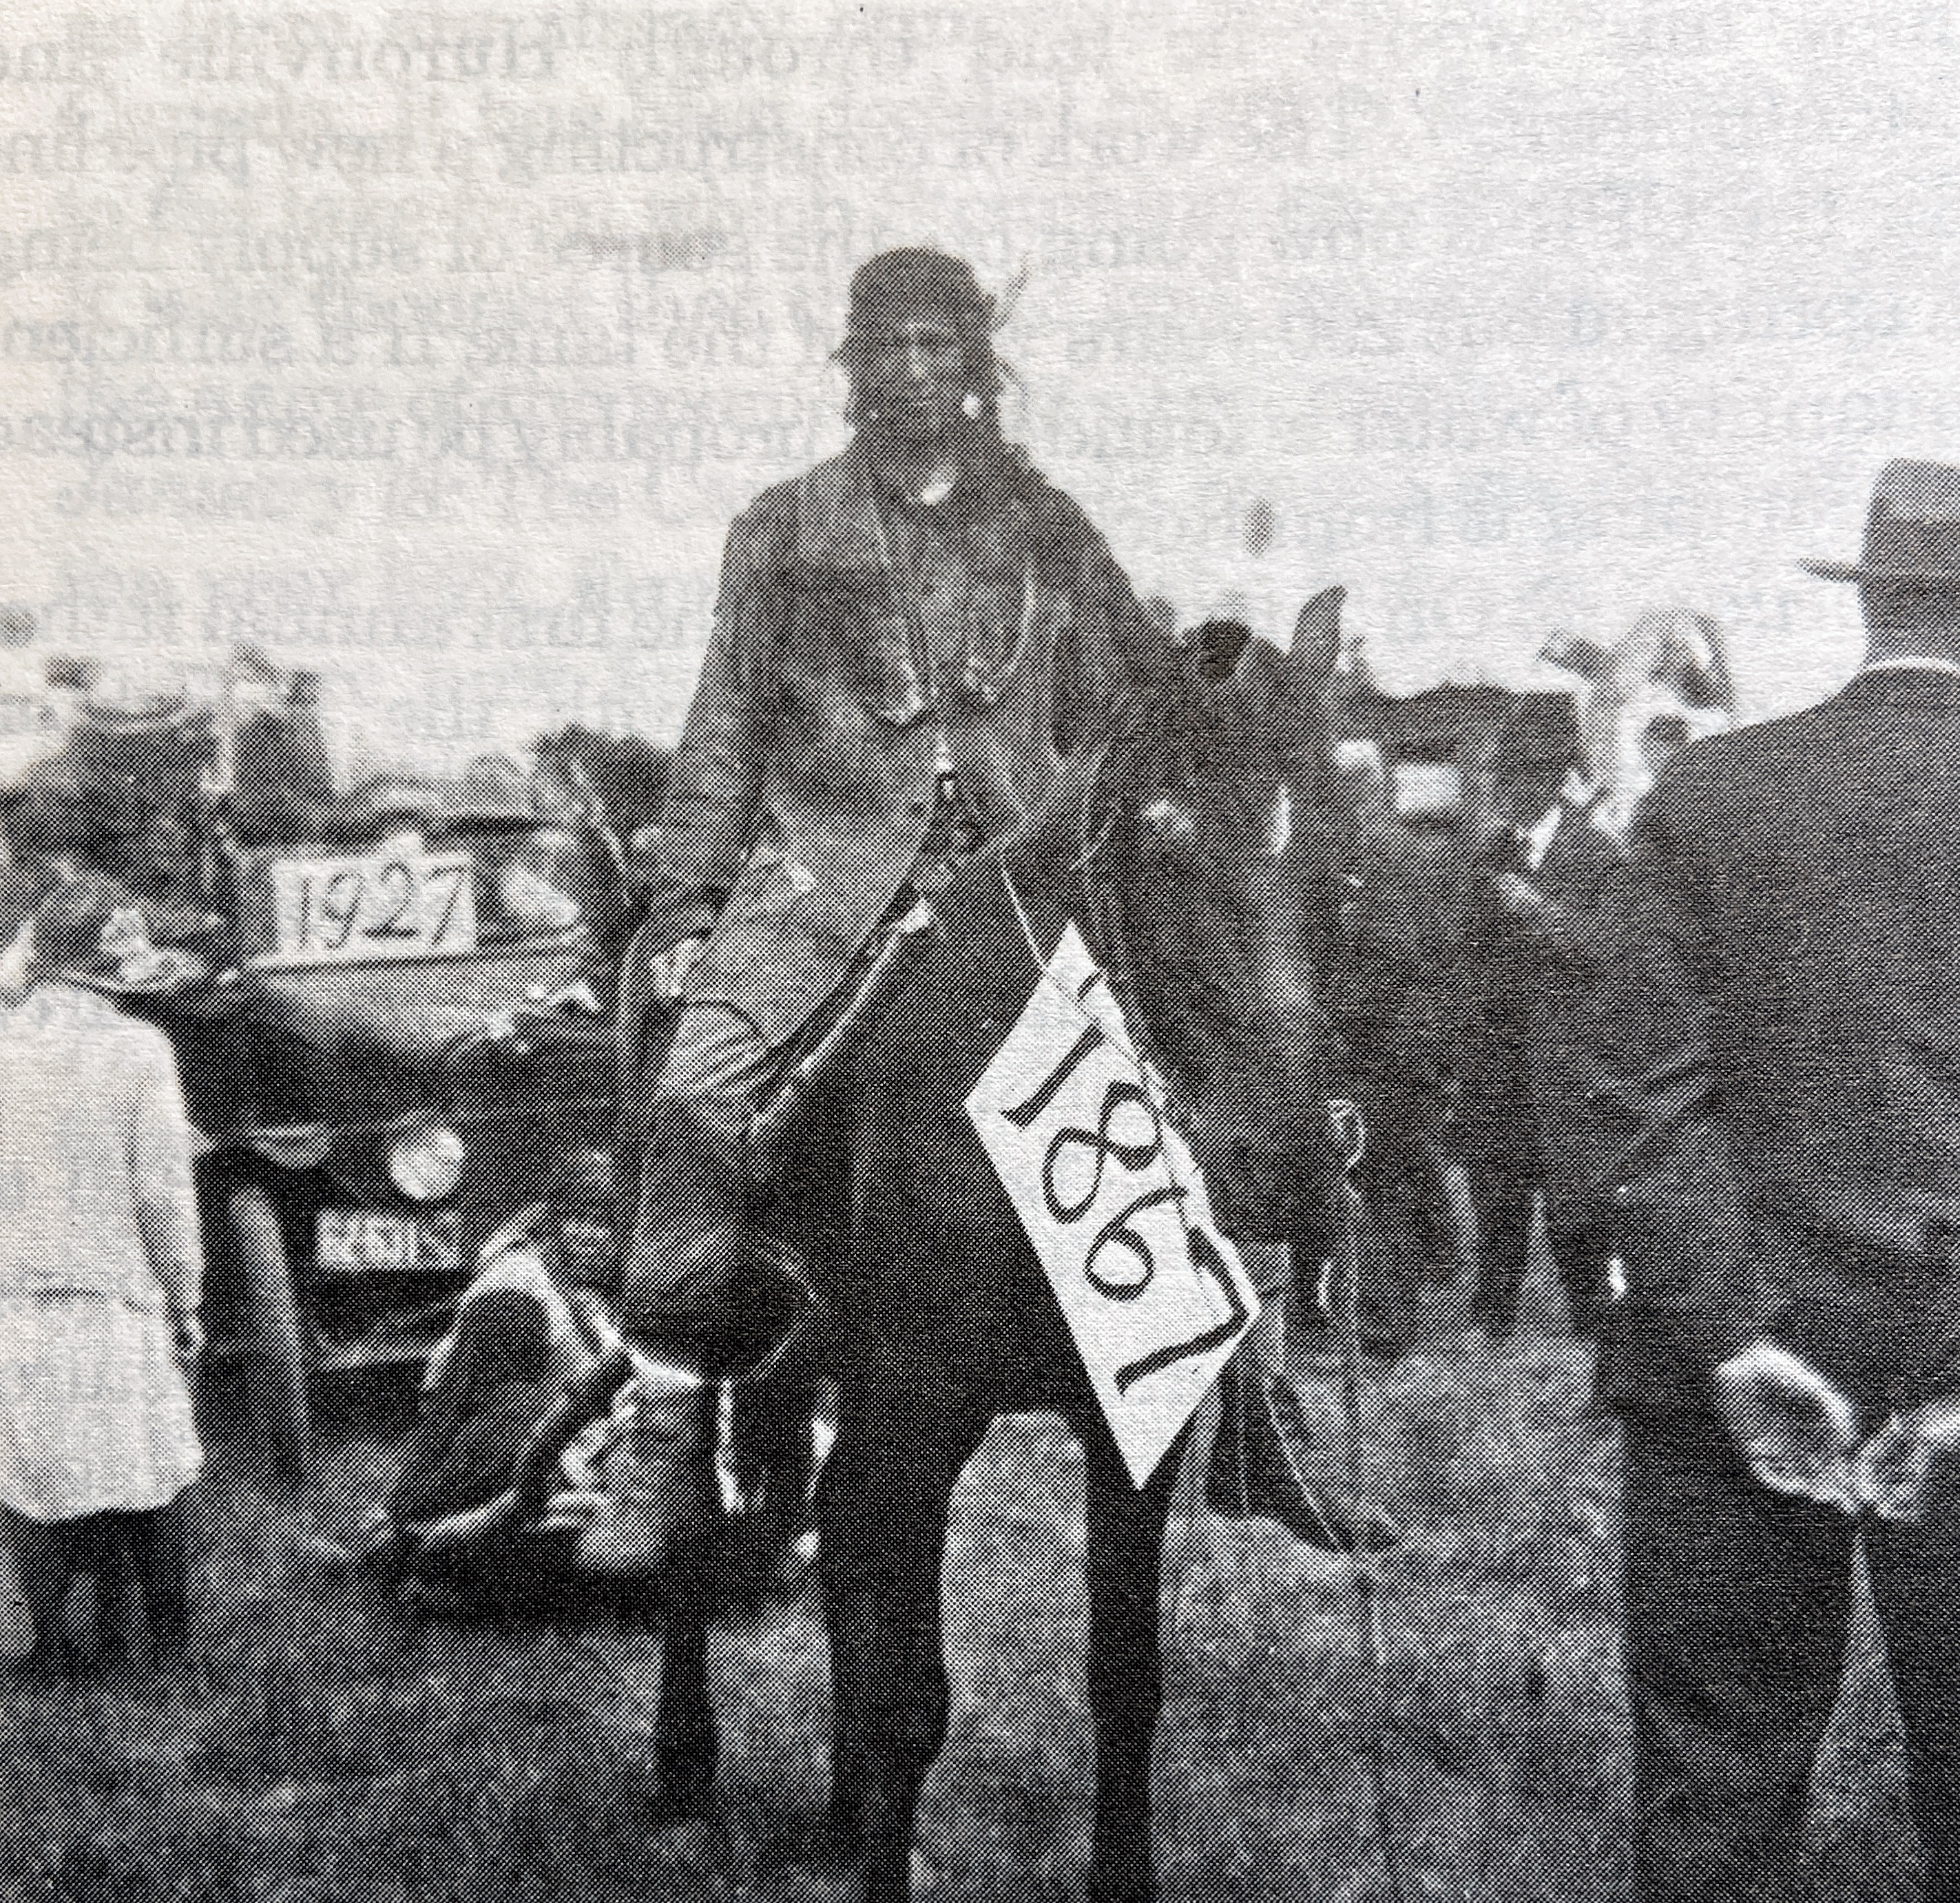 Diamond Jubilee of Confederation July 1, 1927: Frank Booth on horseback pulling travois.